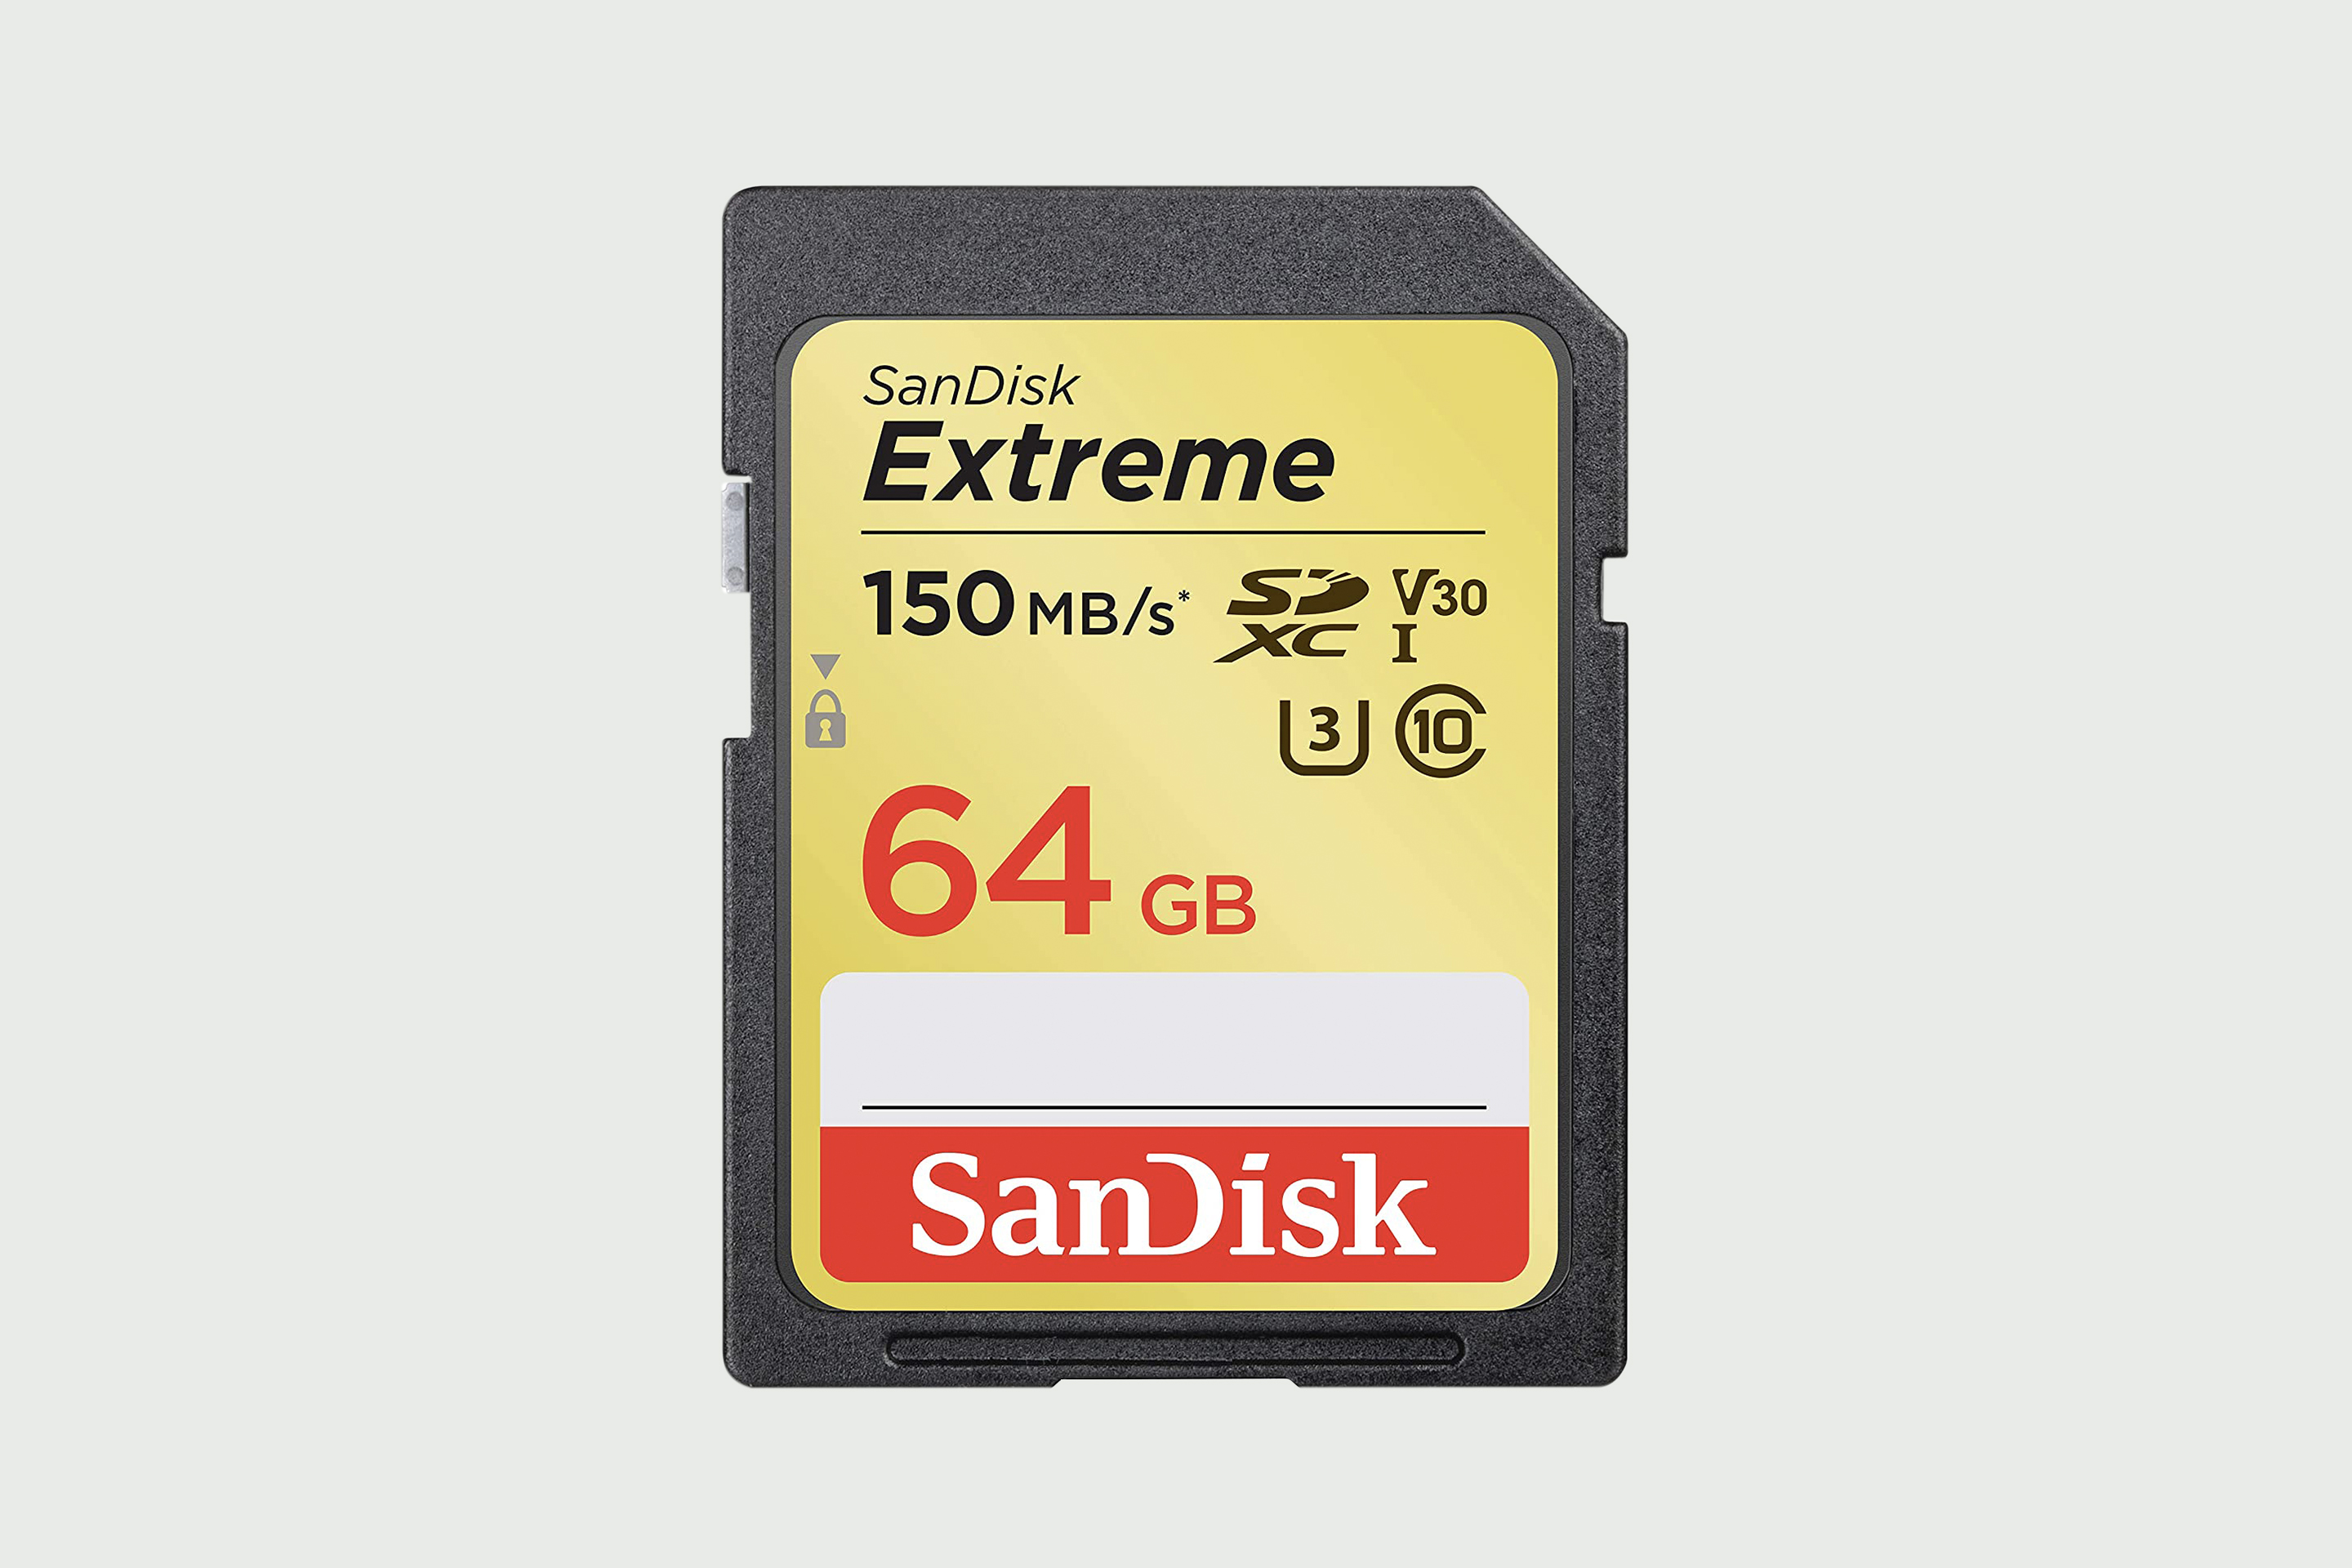 SanDisk Extreme 64GB 150MB/s